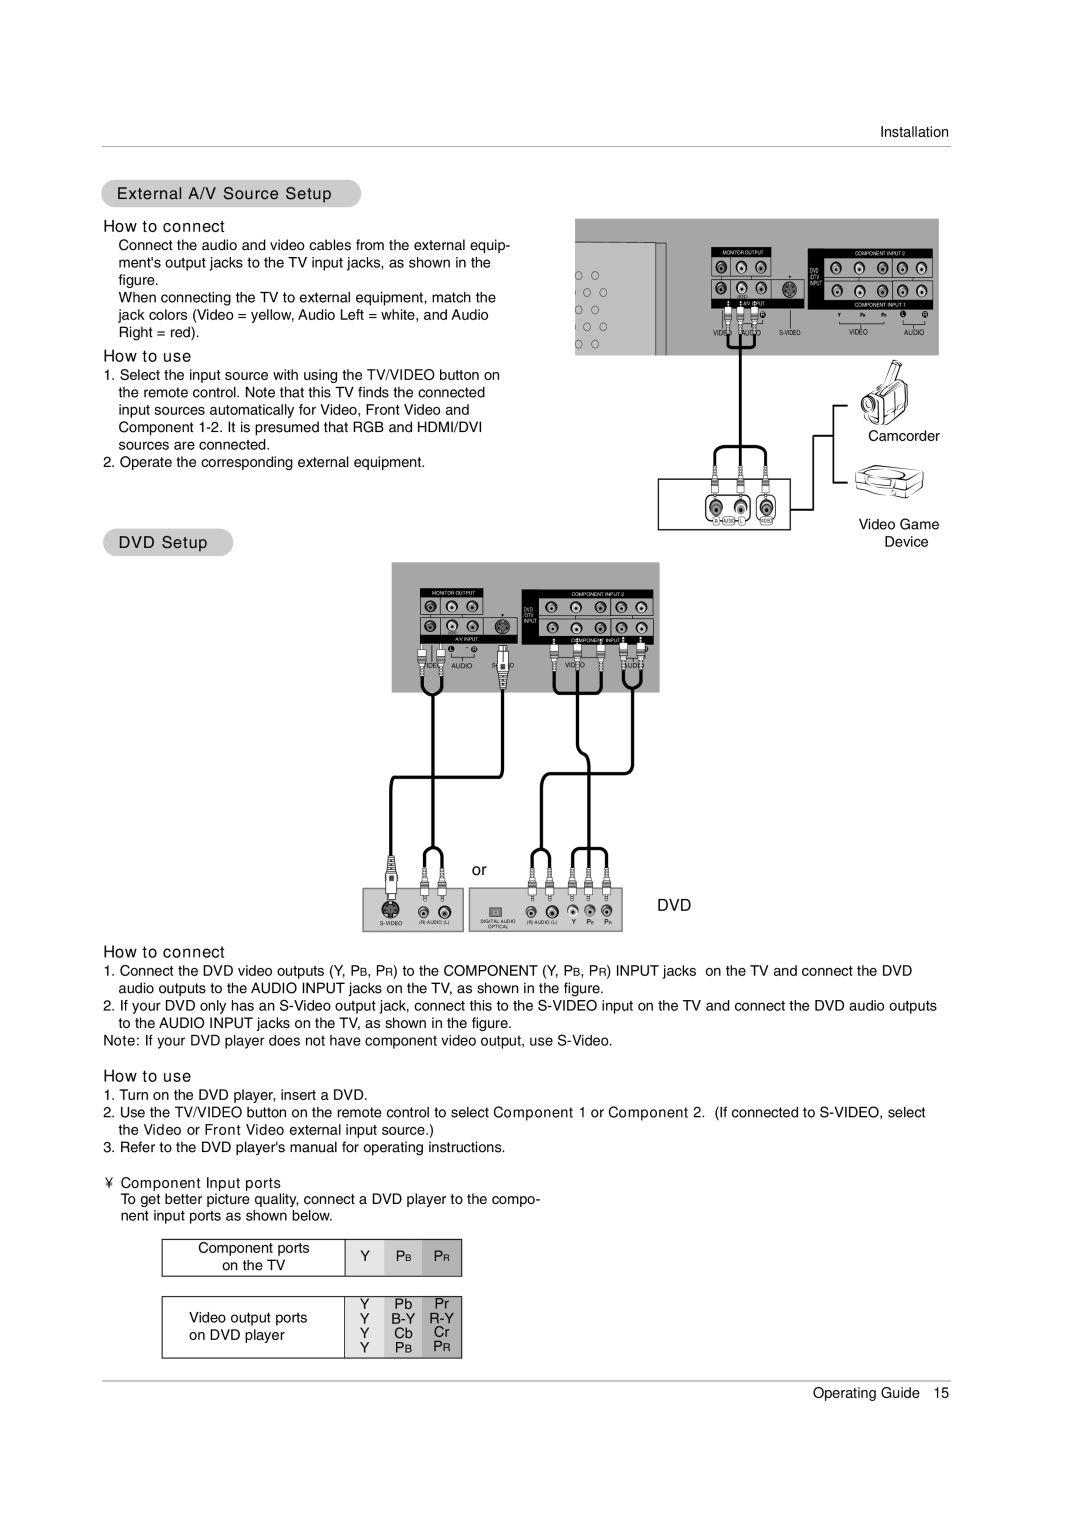 LG Electronics 50PX2DC-UD External A/V Source Setup, How to connect, How to use, DVD Setup, Component Input ports 